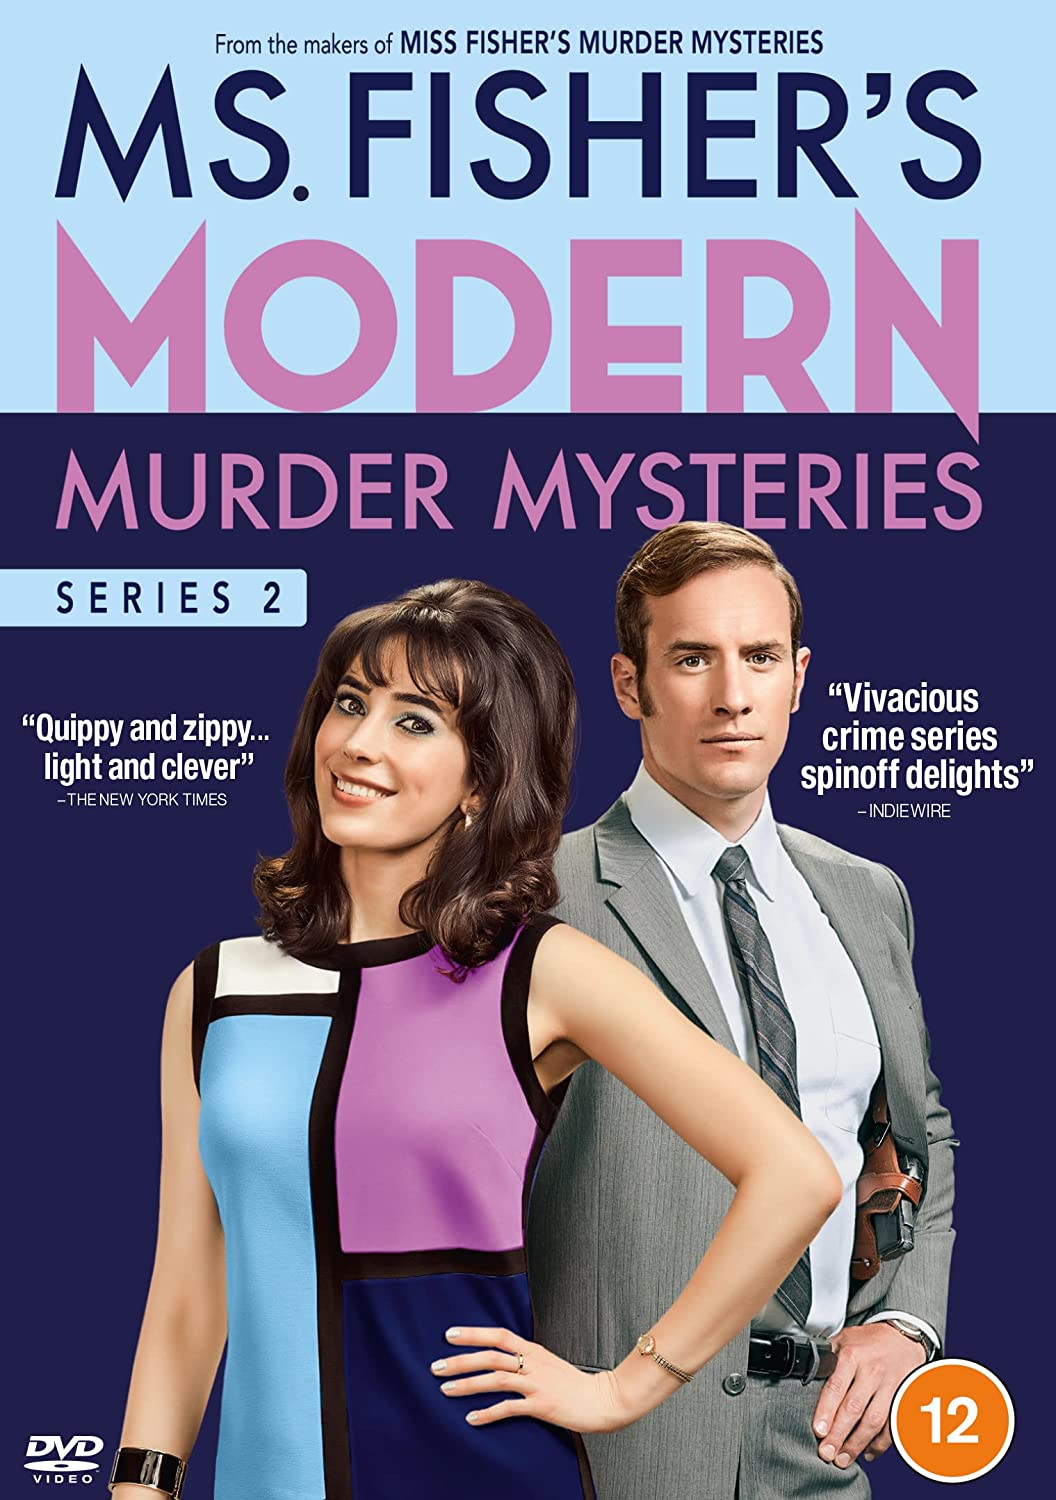 Ms Fisher’s Modern Murder Mysteries Series 2 DVD